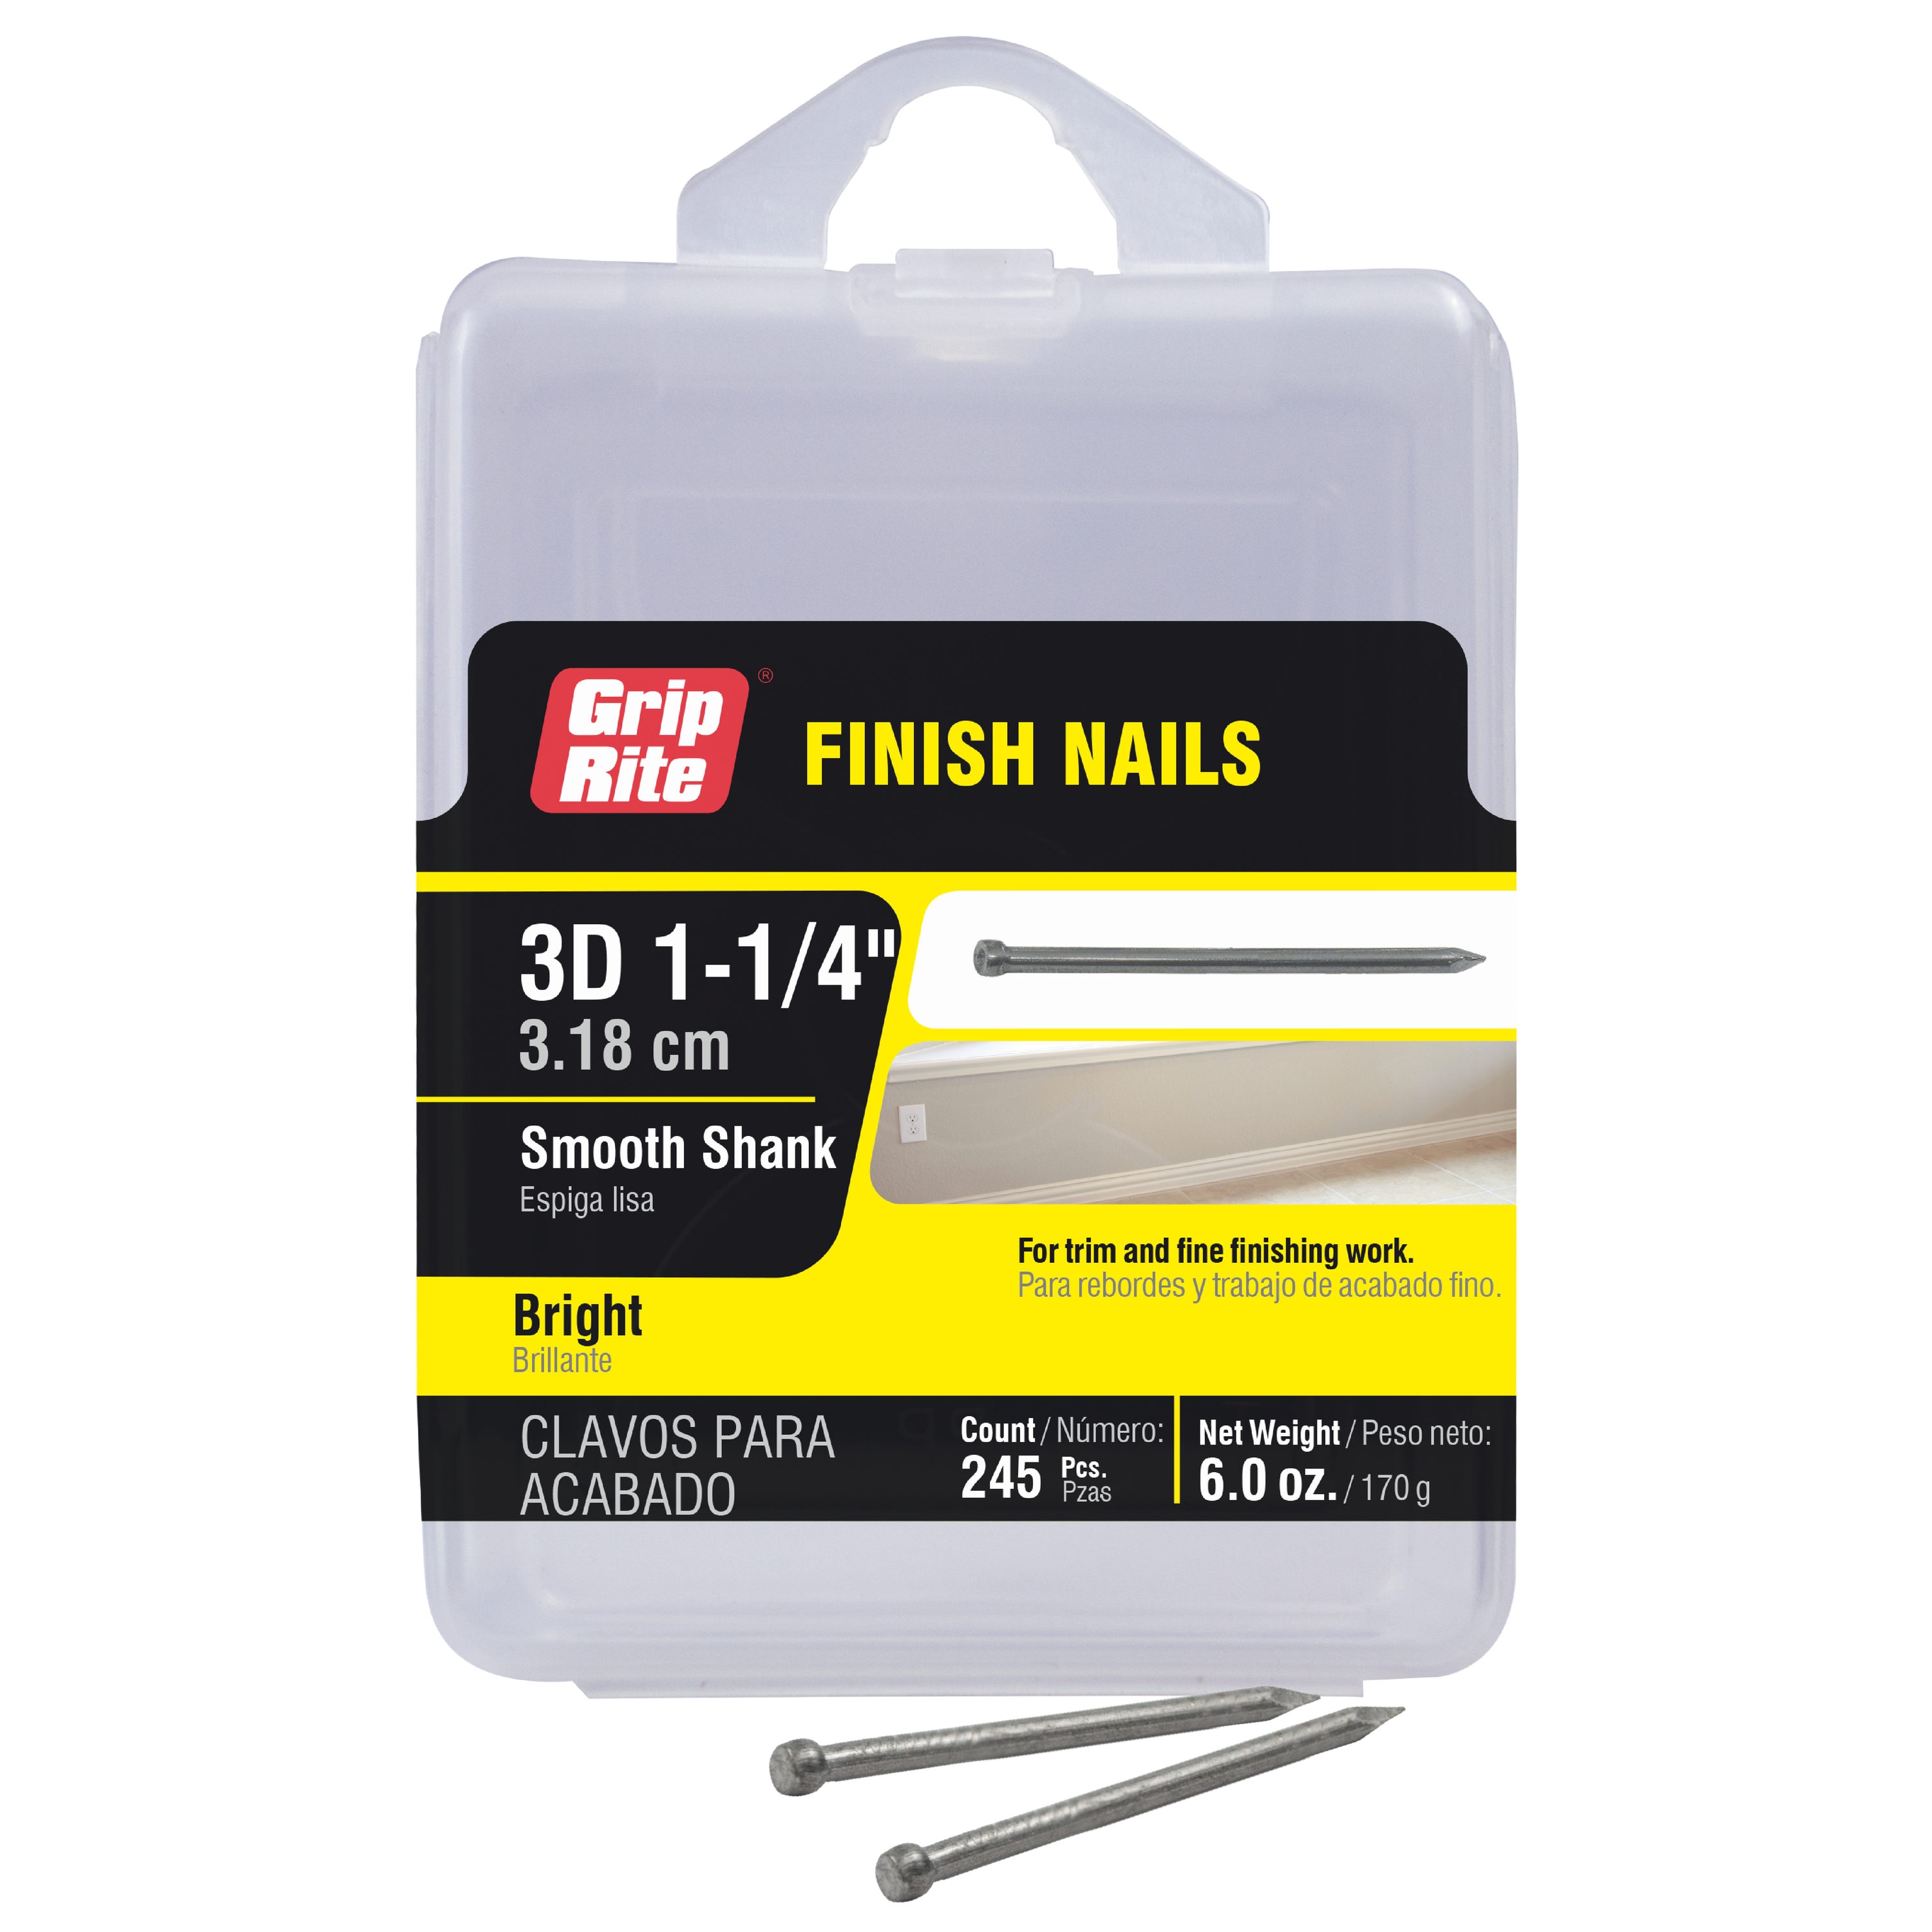 DEWALT Finish Nails, 20-Degree, 2-Inch, 16GA, 2500-Pack (DCA16200) -  Collated Finish Nails - Amazon.com